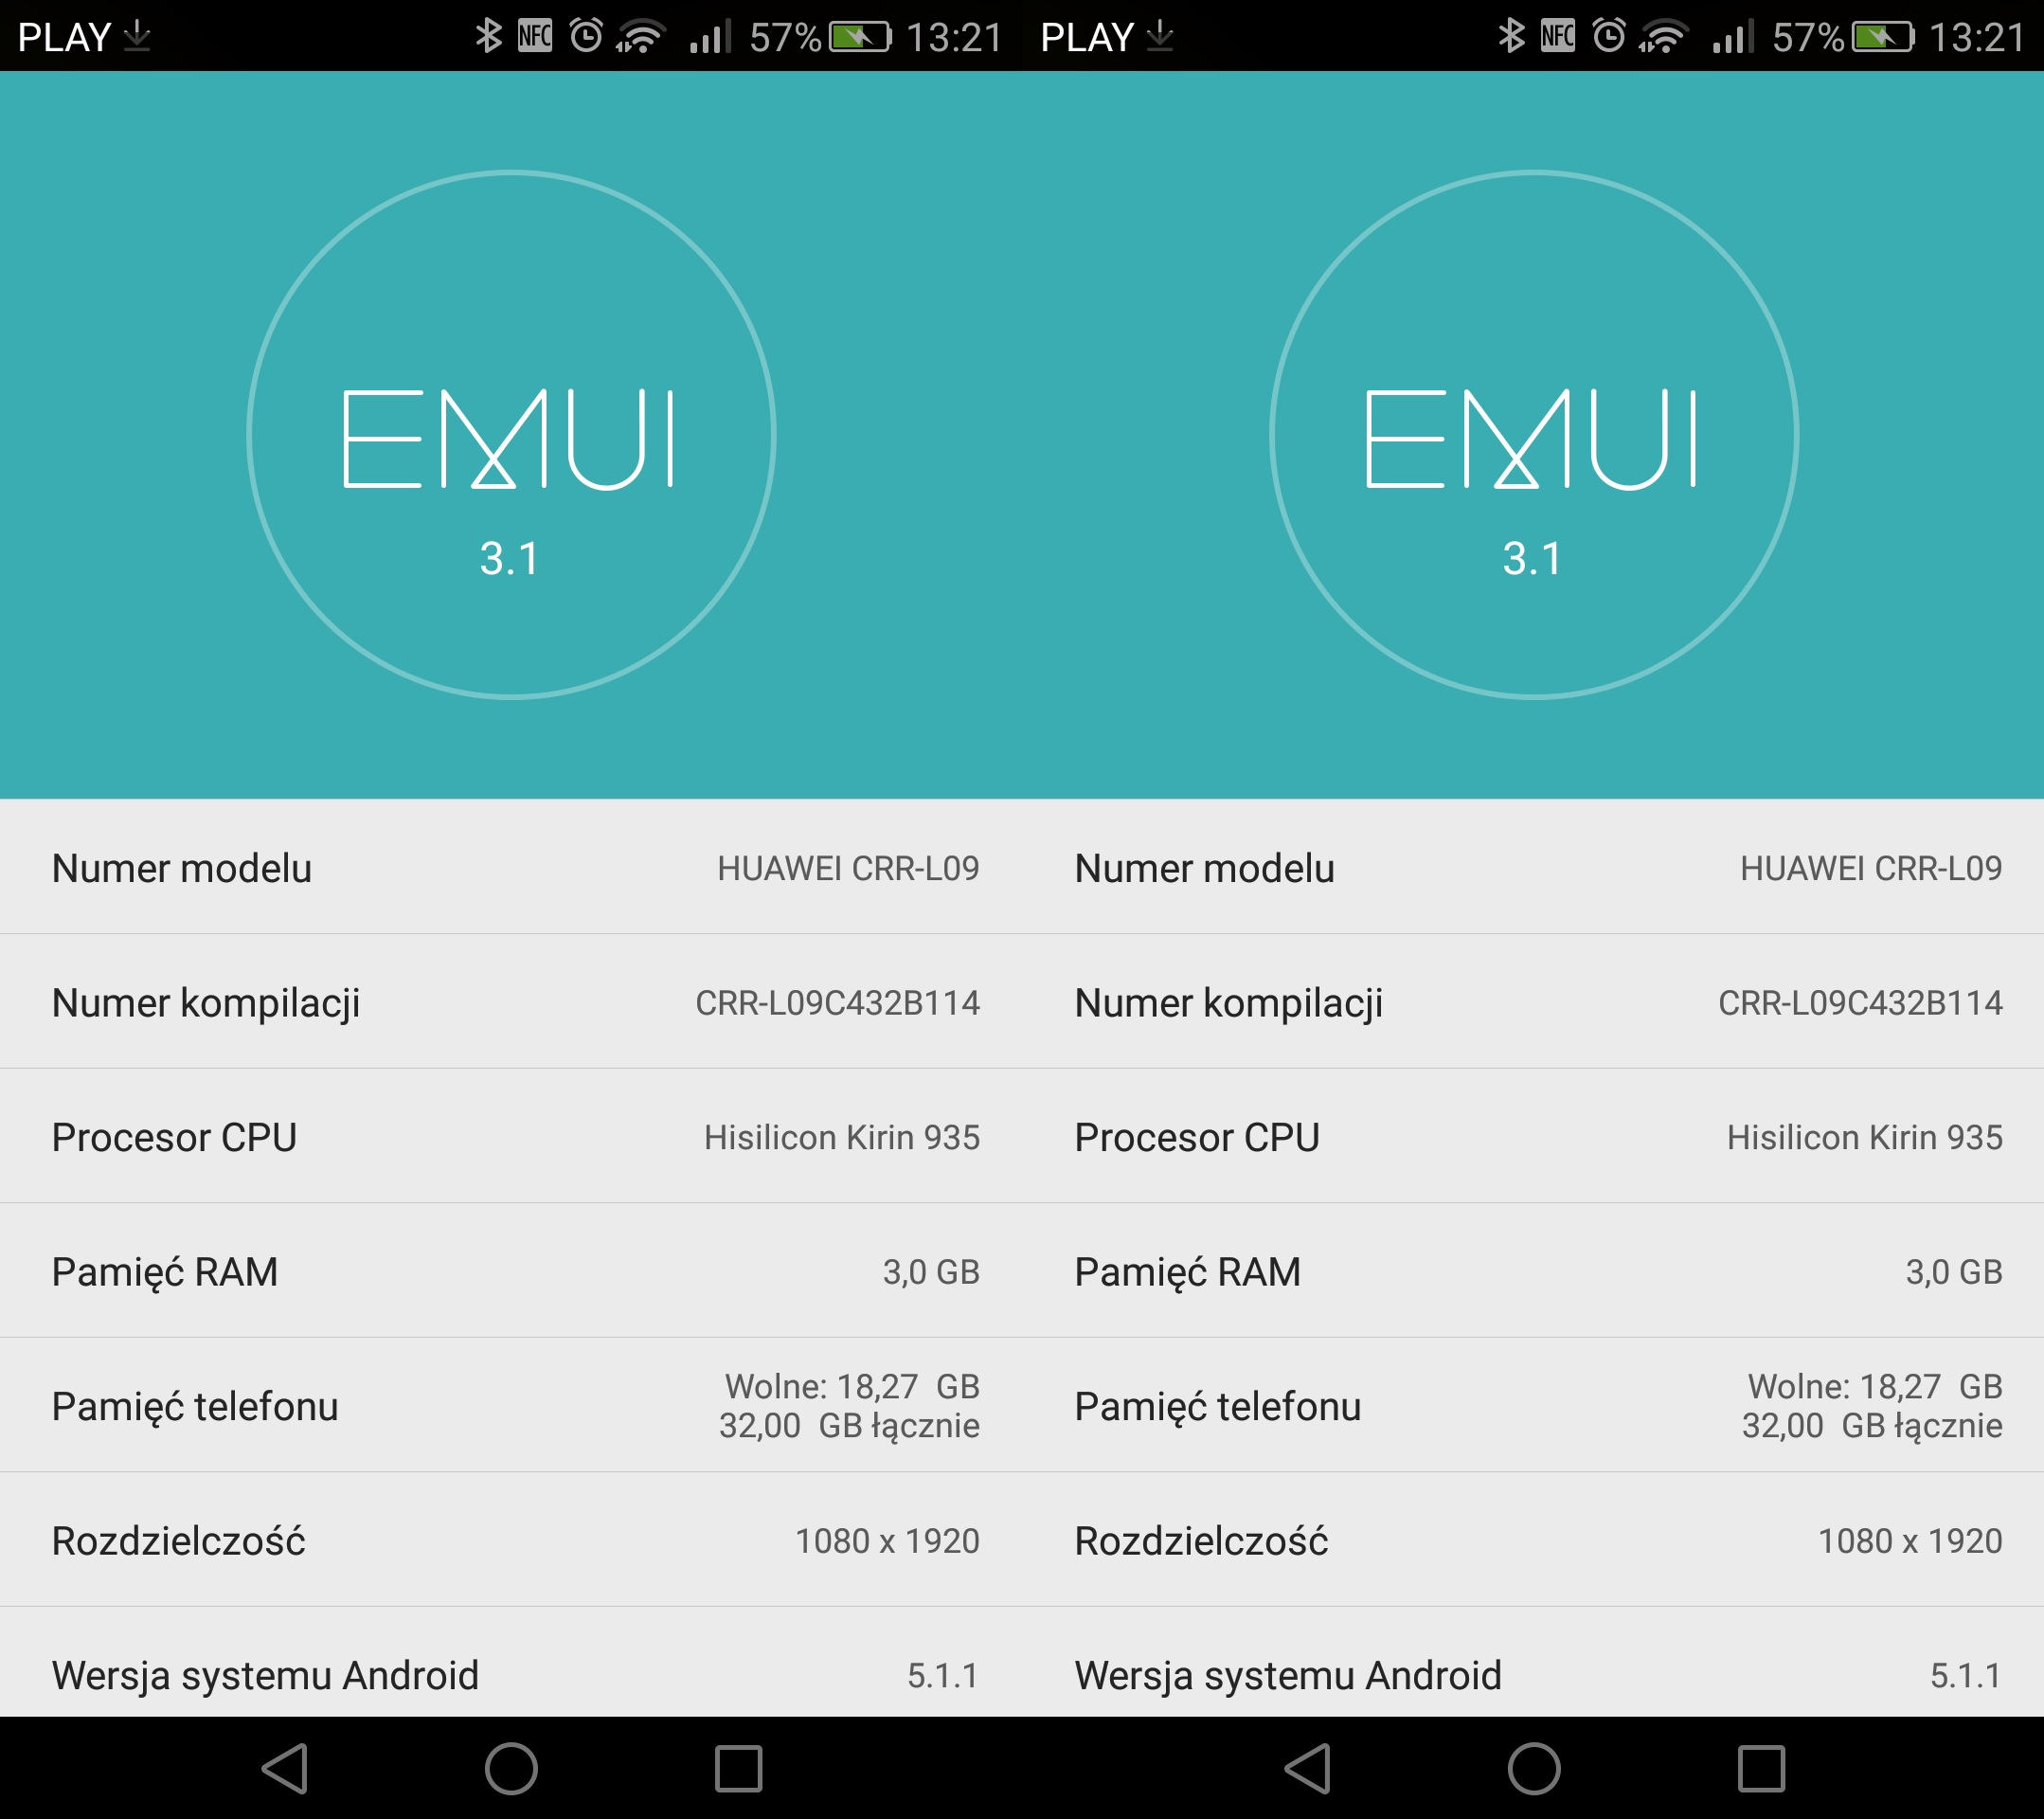 Huawei Mate S (CRR-L09) - nakładka EMUI na system Android -recenzja 90sekund.pl